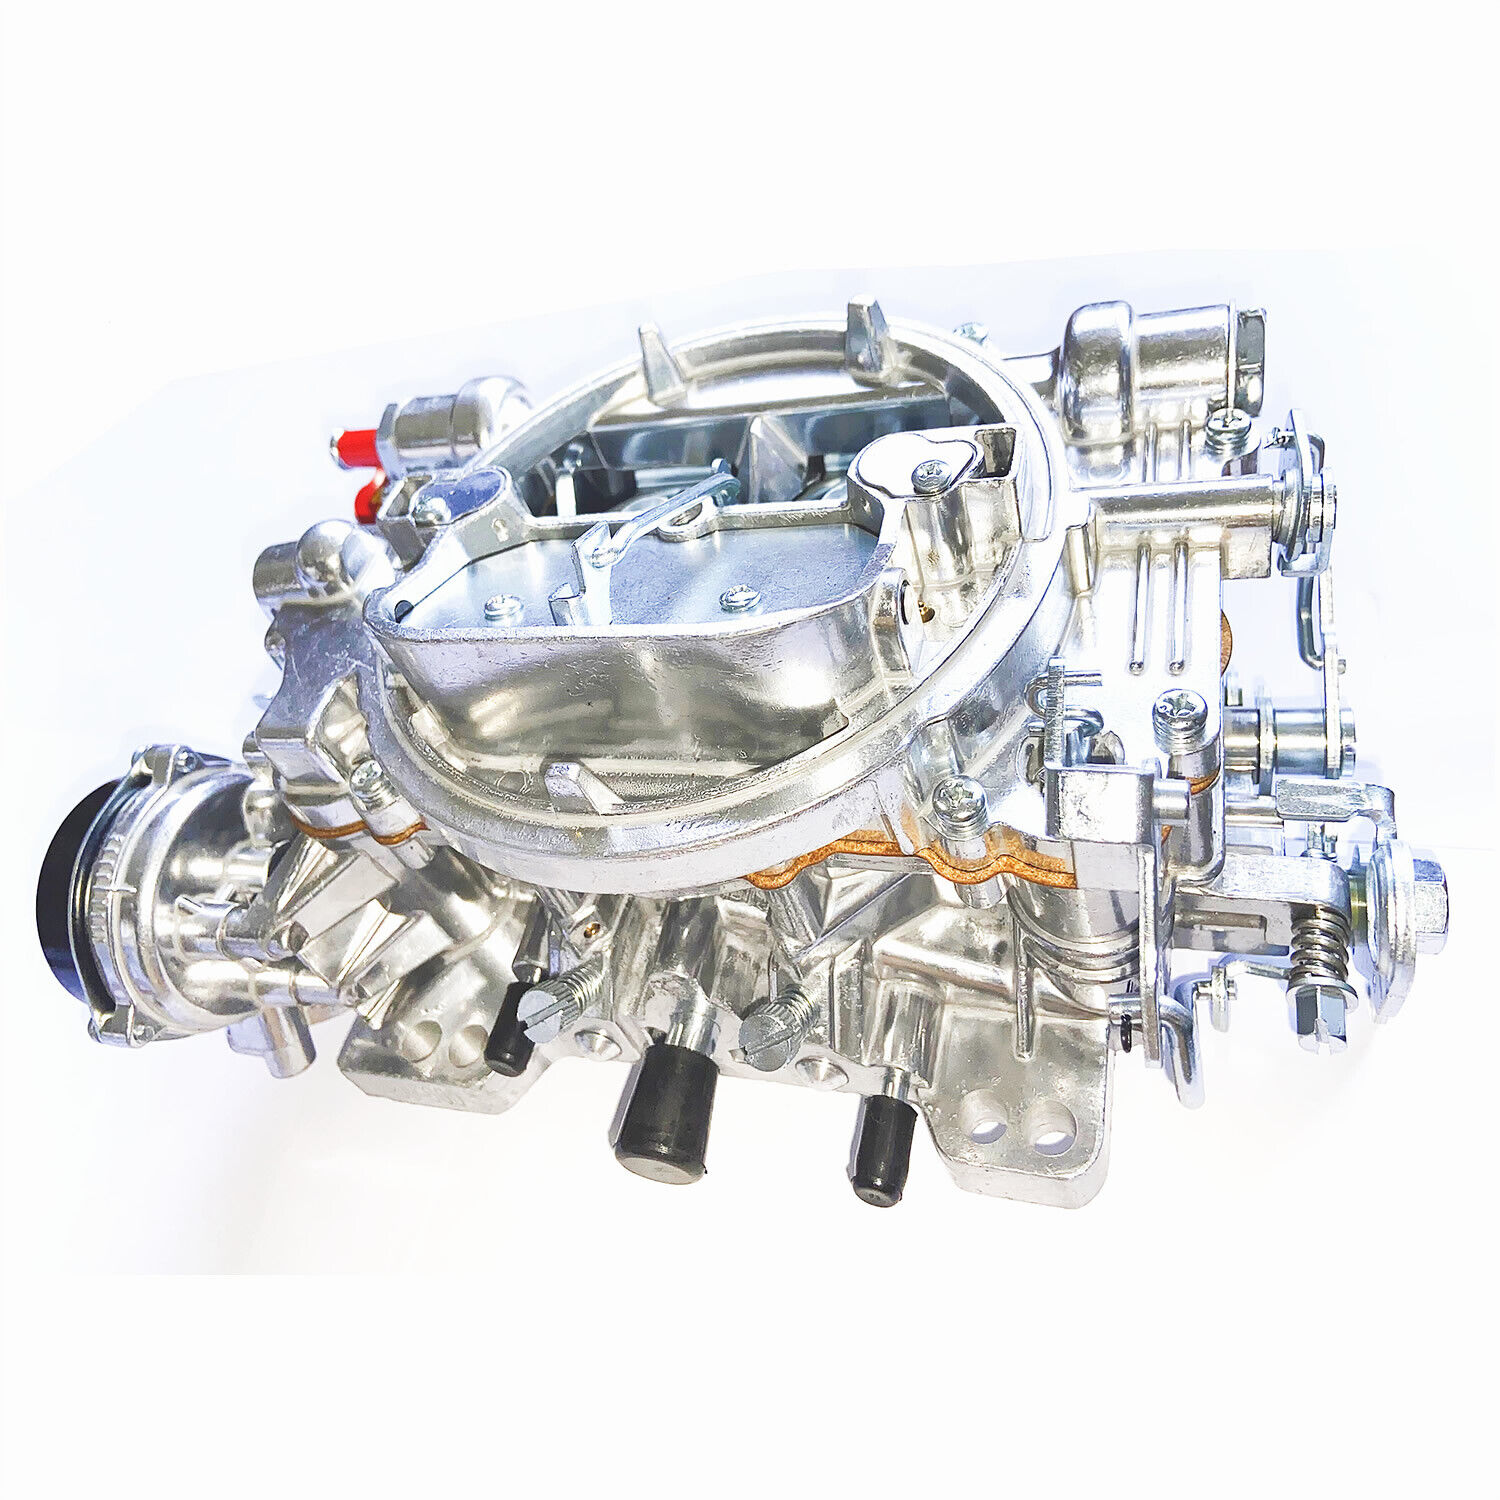 Replacement Edelbrock Marine Carburetor 600 CFM 4-Barrel Electric Choke #1409